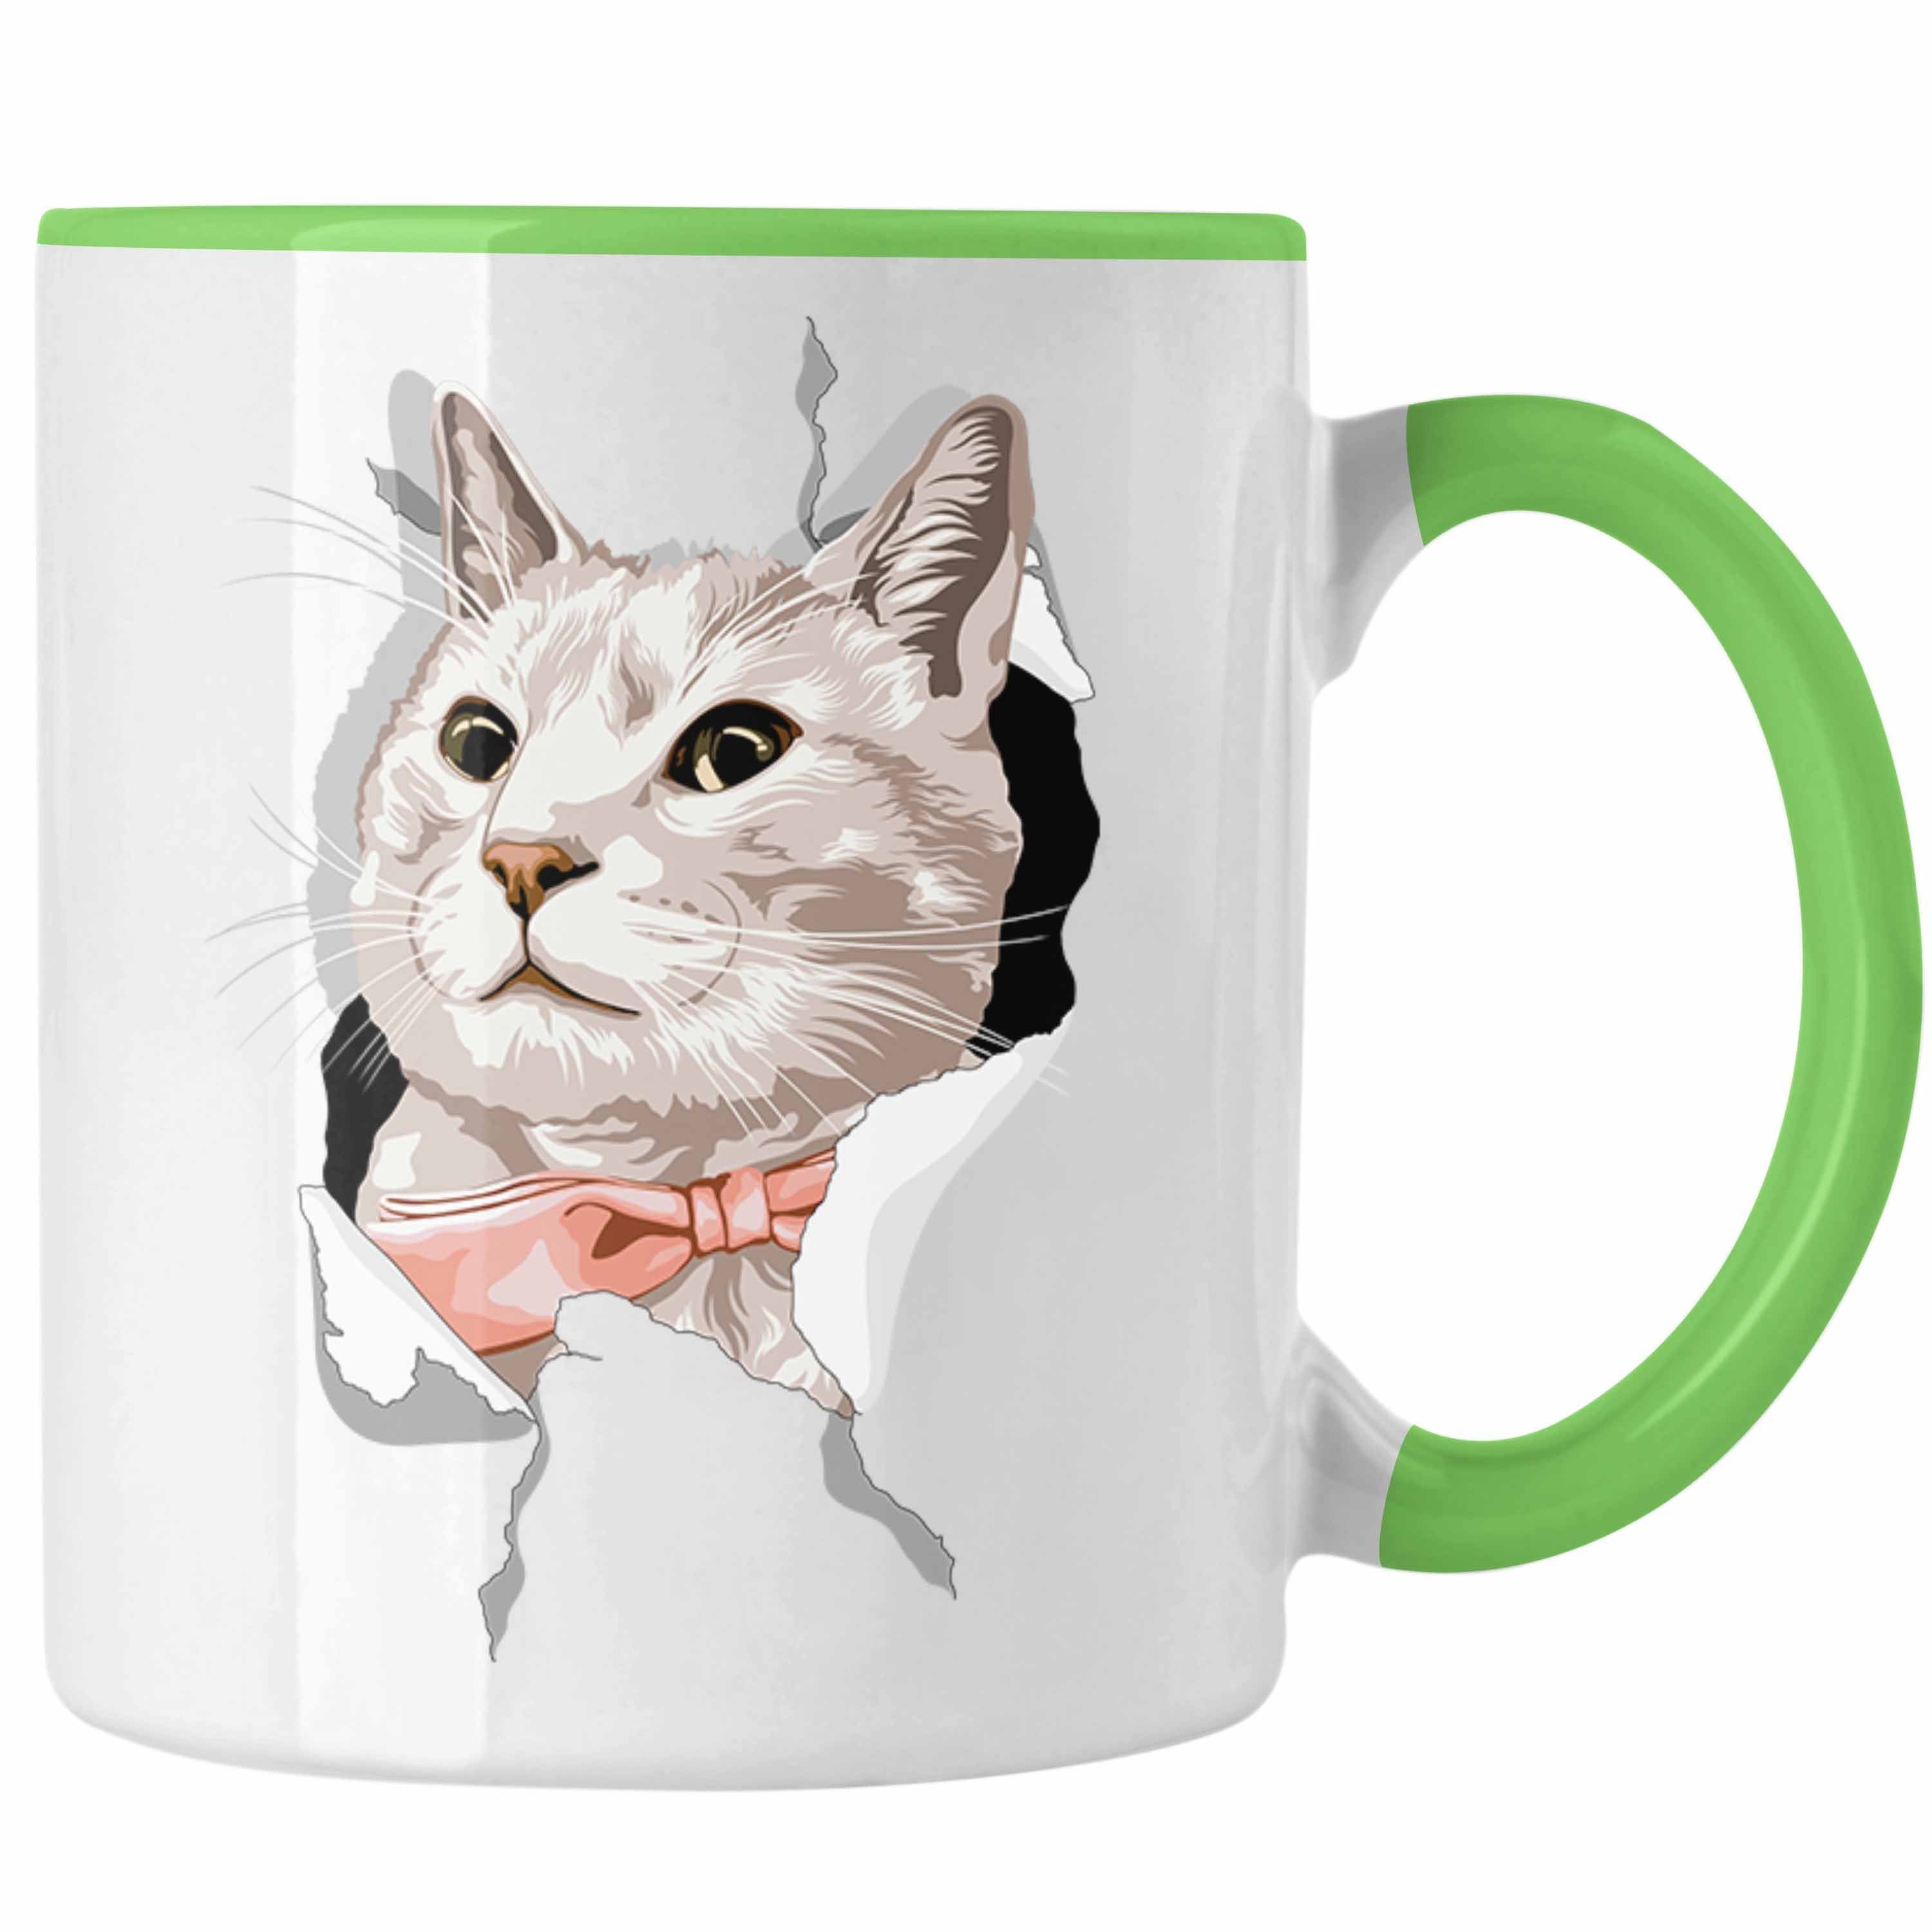 Trendation Tasse Trendation - Lustige Katzen Tasse Geschenk Katzenbesitzerin 3D Katzengrafik Geschenkidee Grün